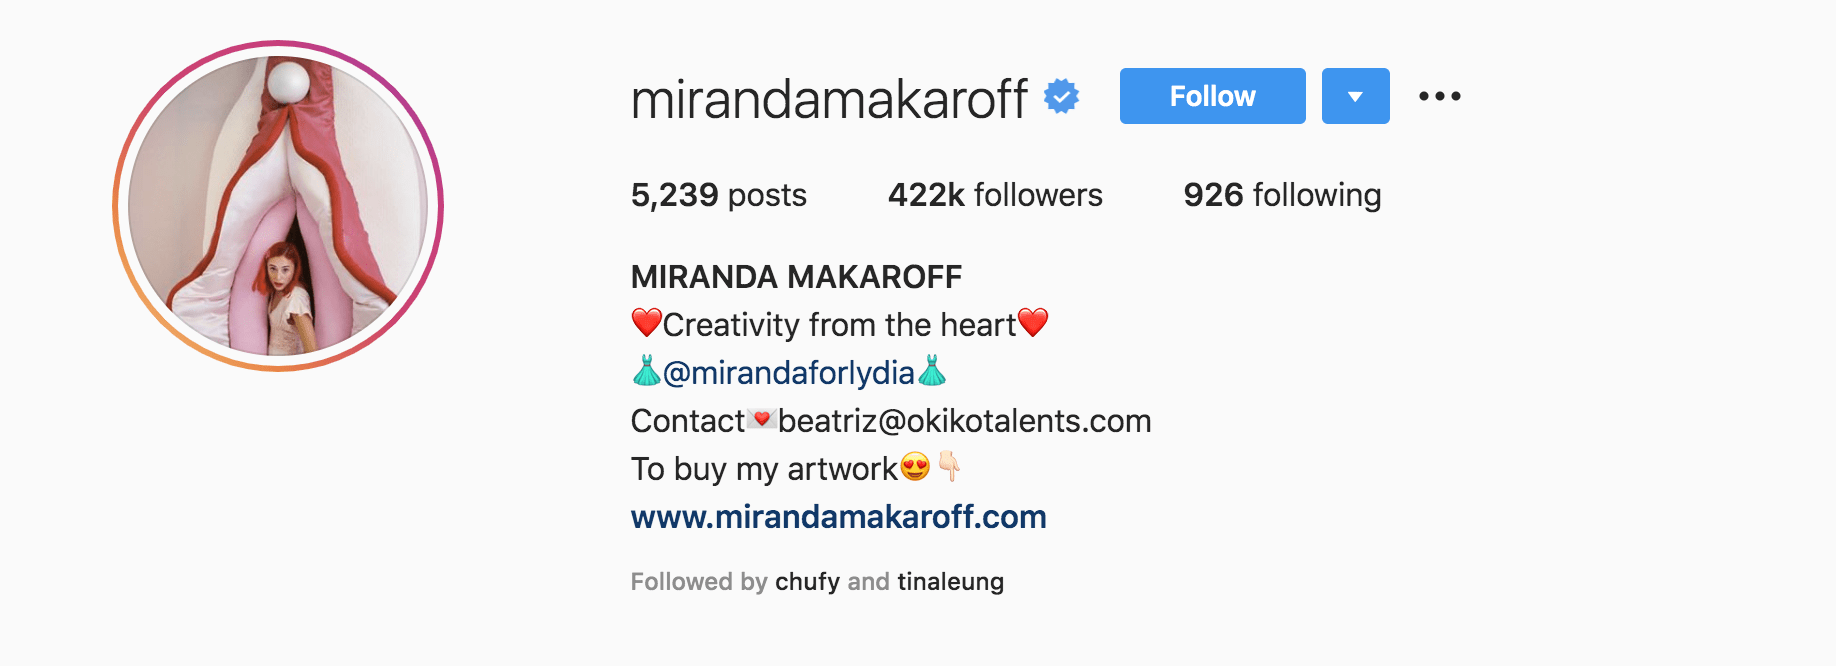 Top Fashion Influencers - Miranda Makaroff